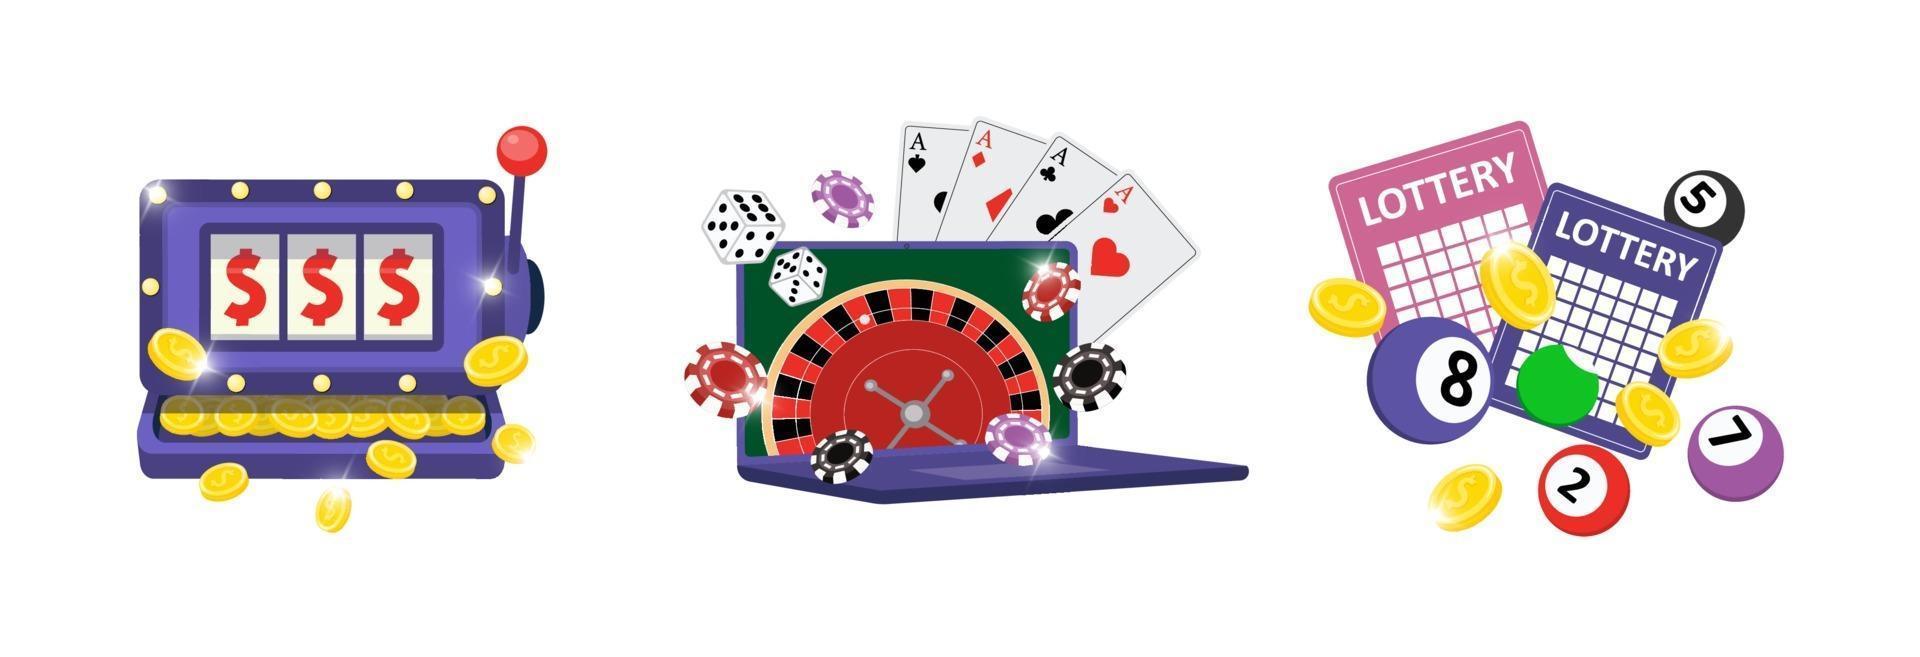 Online gambling addiction icon set. Risky entertainment casino vector